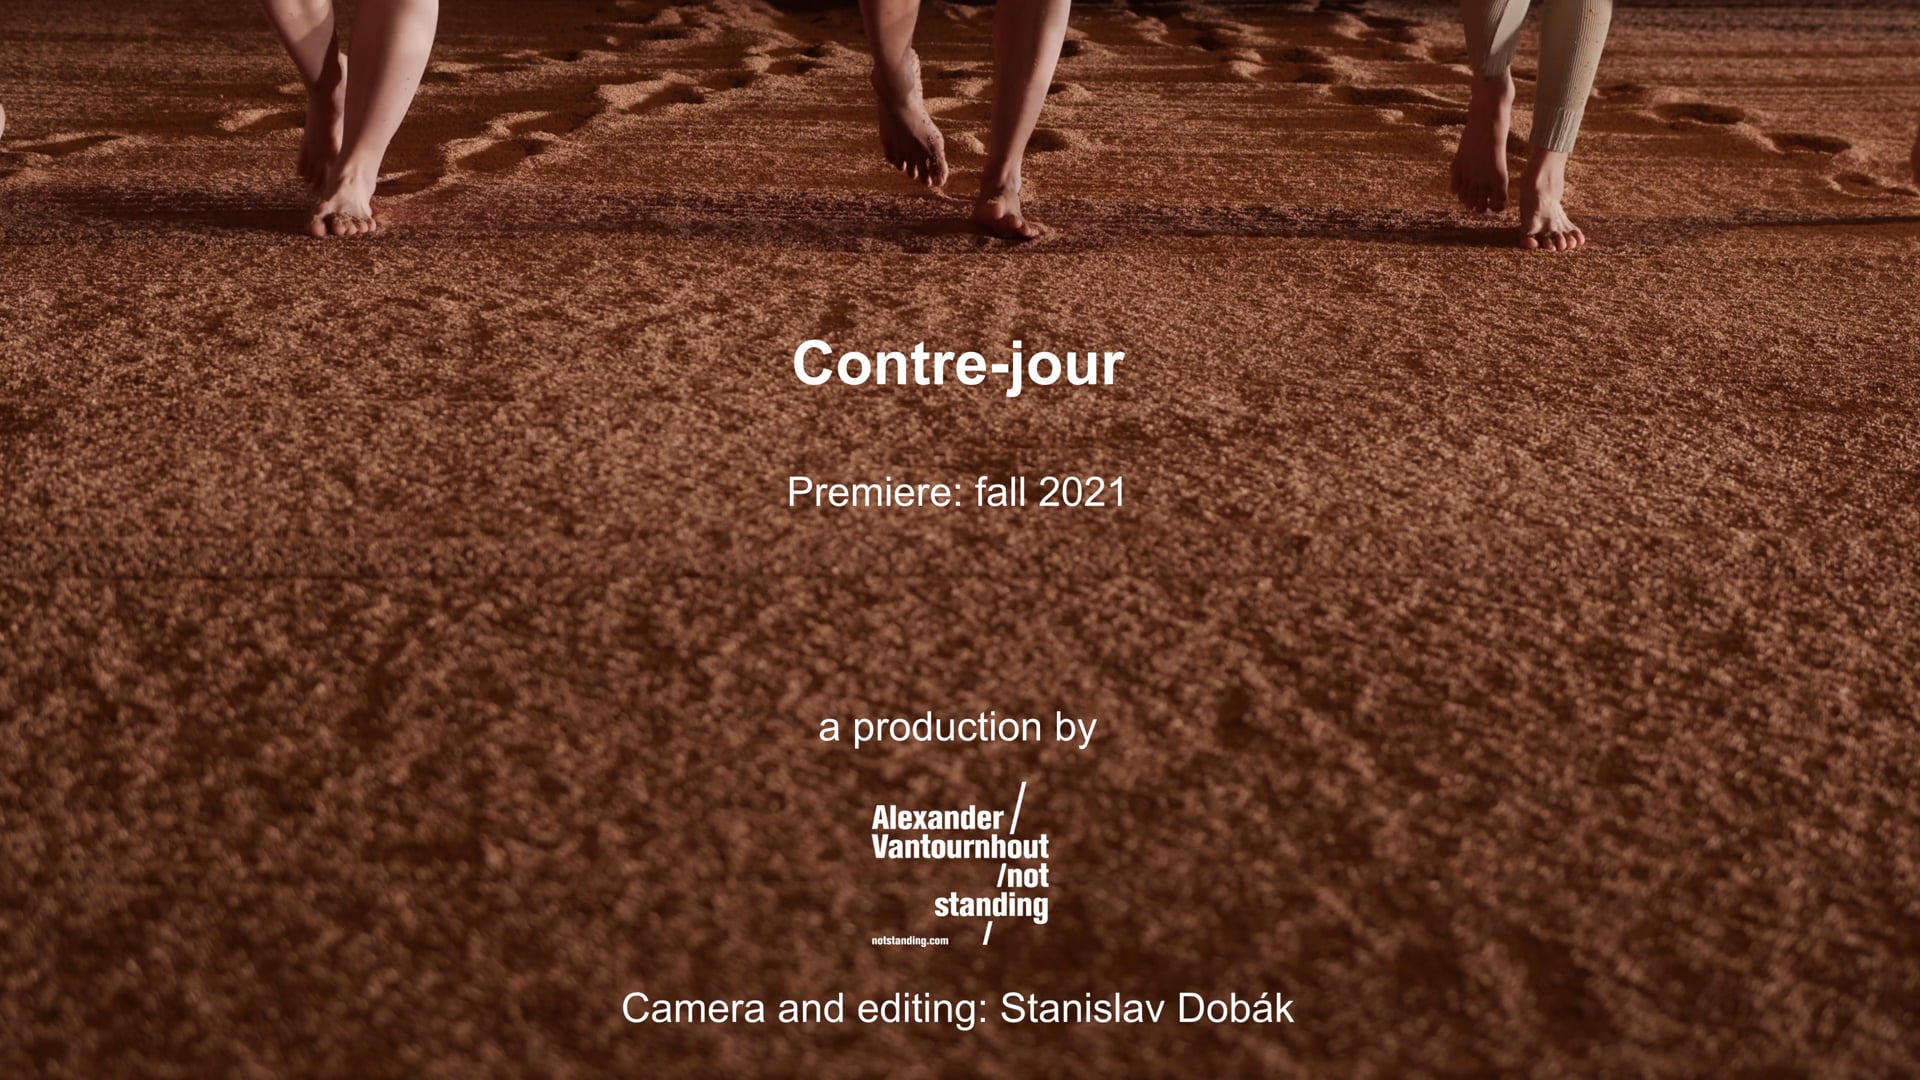 Contre-jour (teaser) 2021 - Alexander Vantournhout / not standing